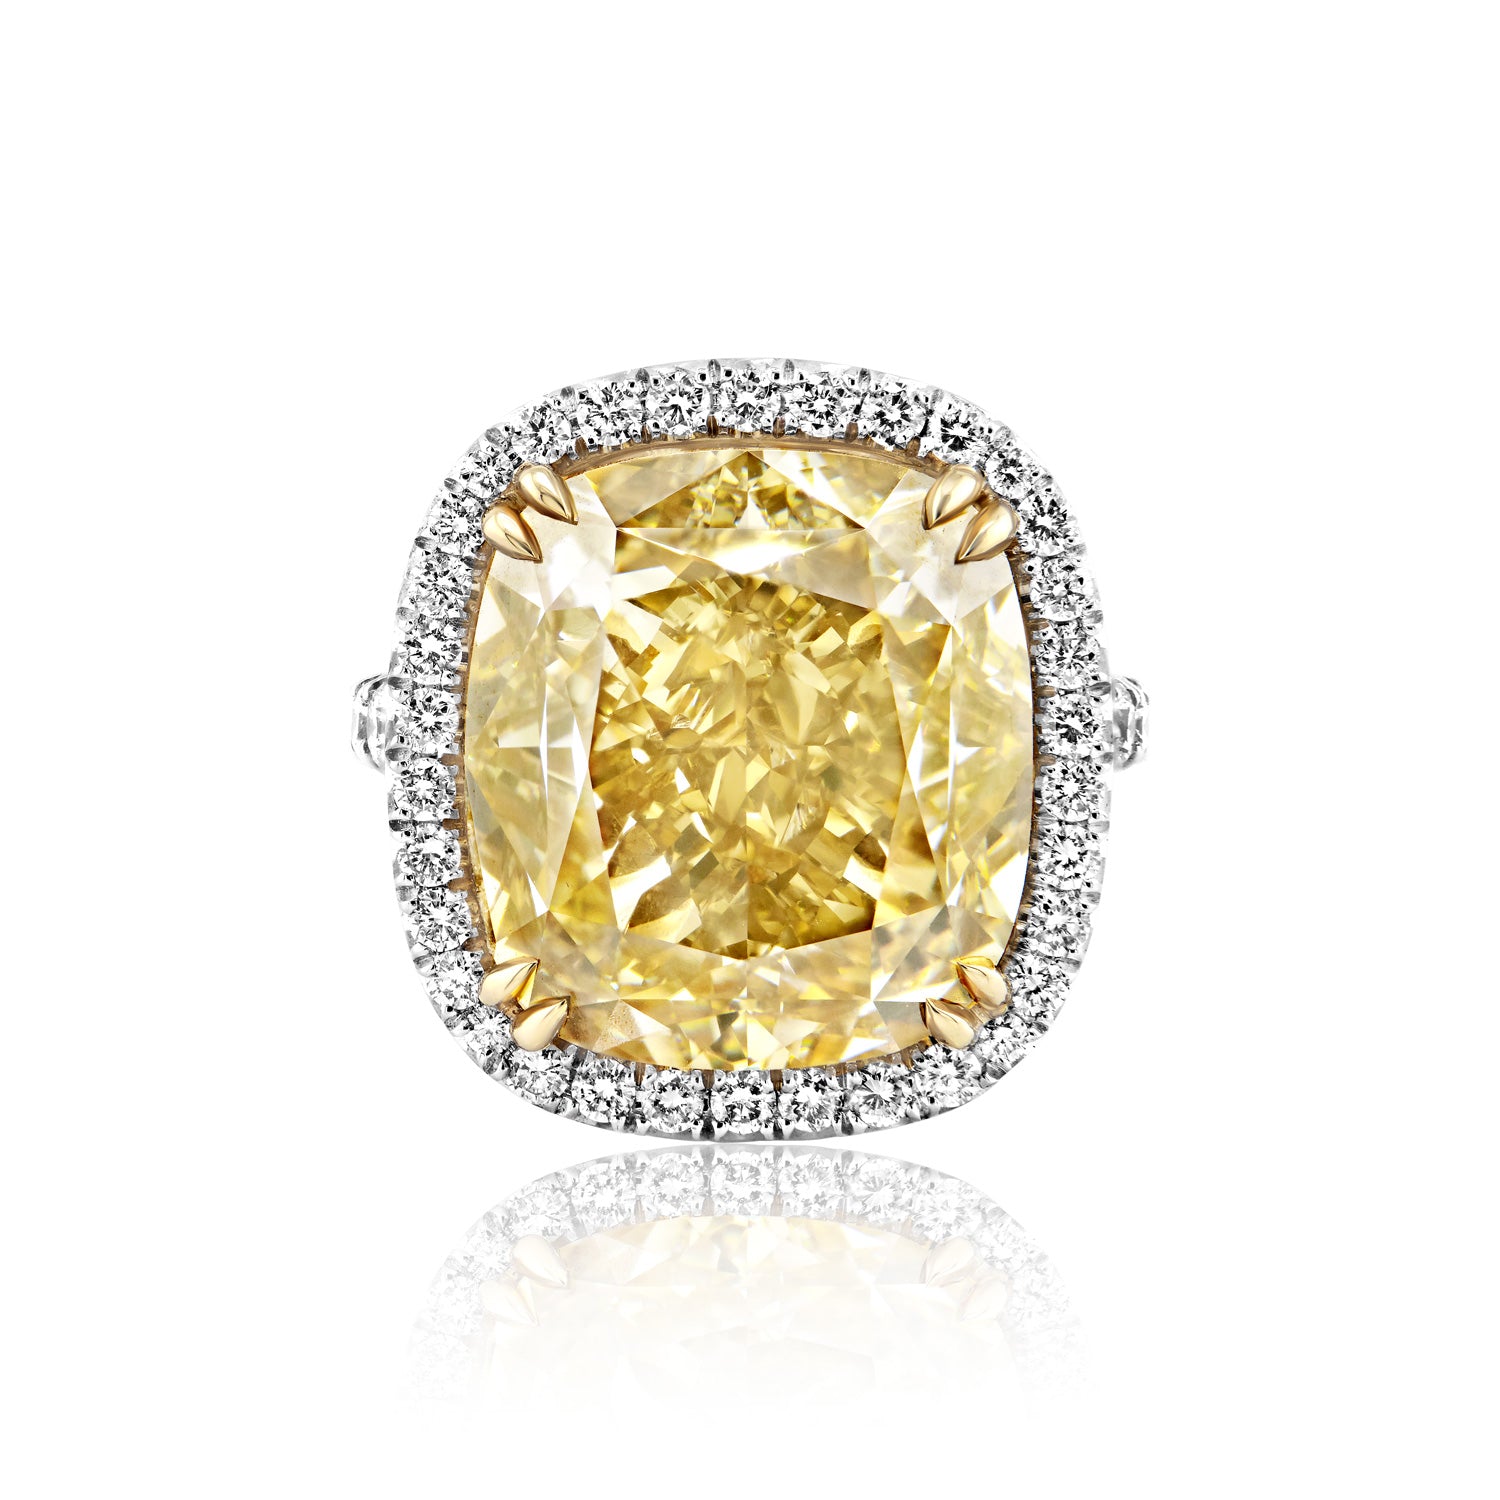 Addisyn 21 Carat Fancy Brownish Greenish Yellow SI1 Cushion Cut Diamond Engagement Ring Front View